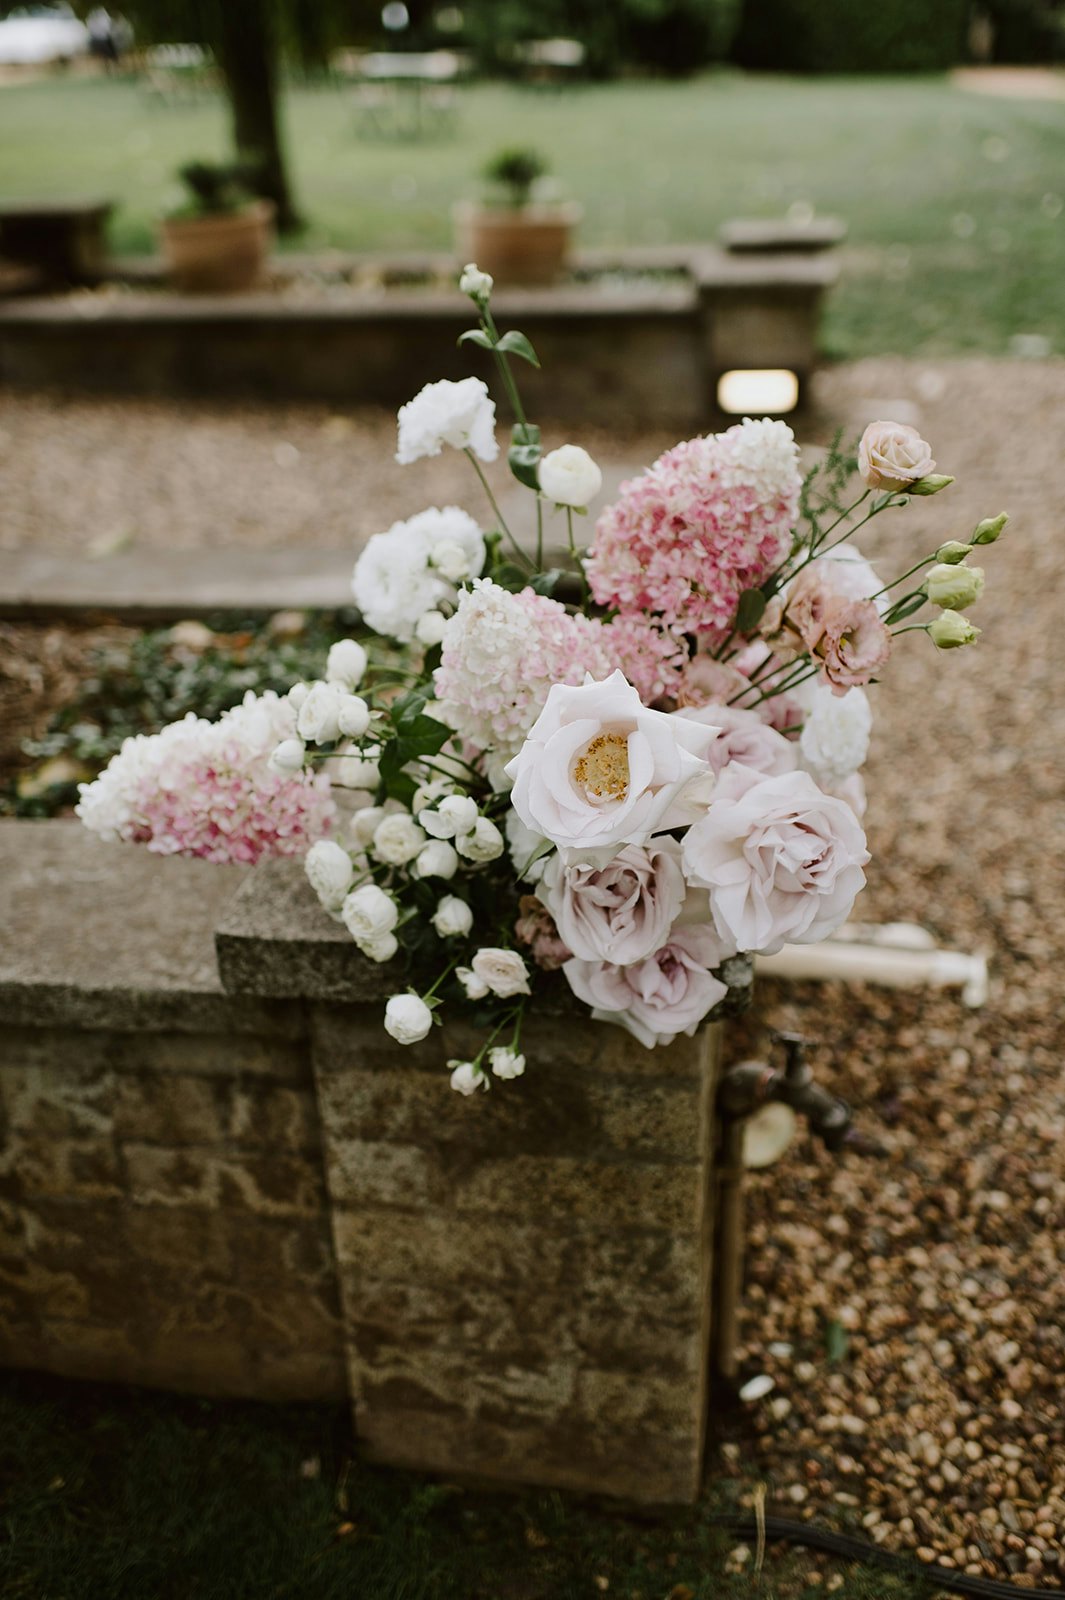 Flowers at wedding ceremony